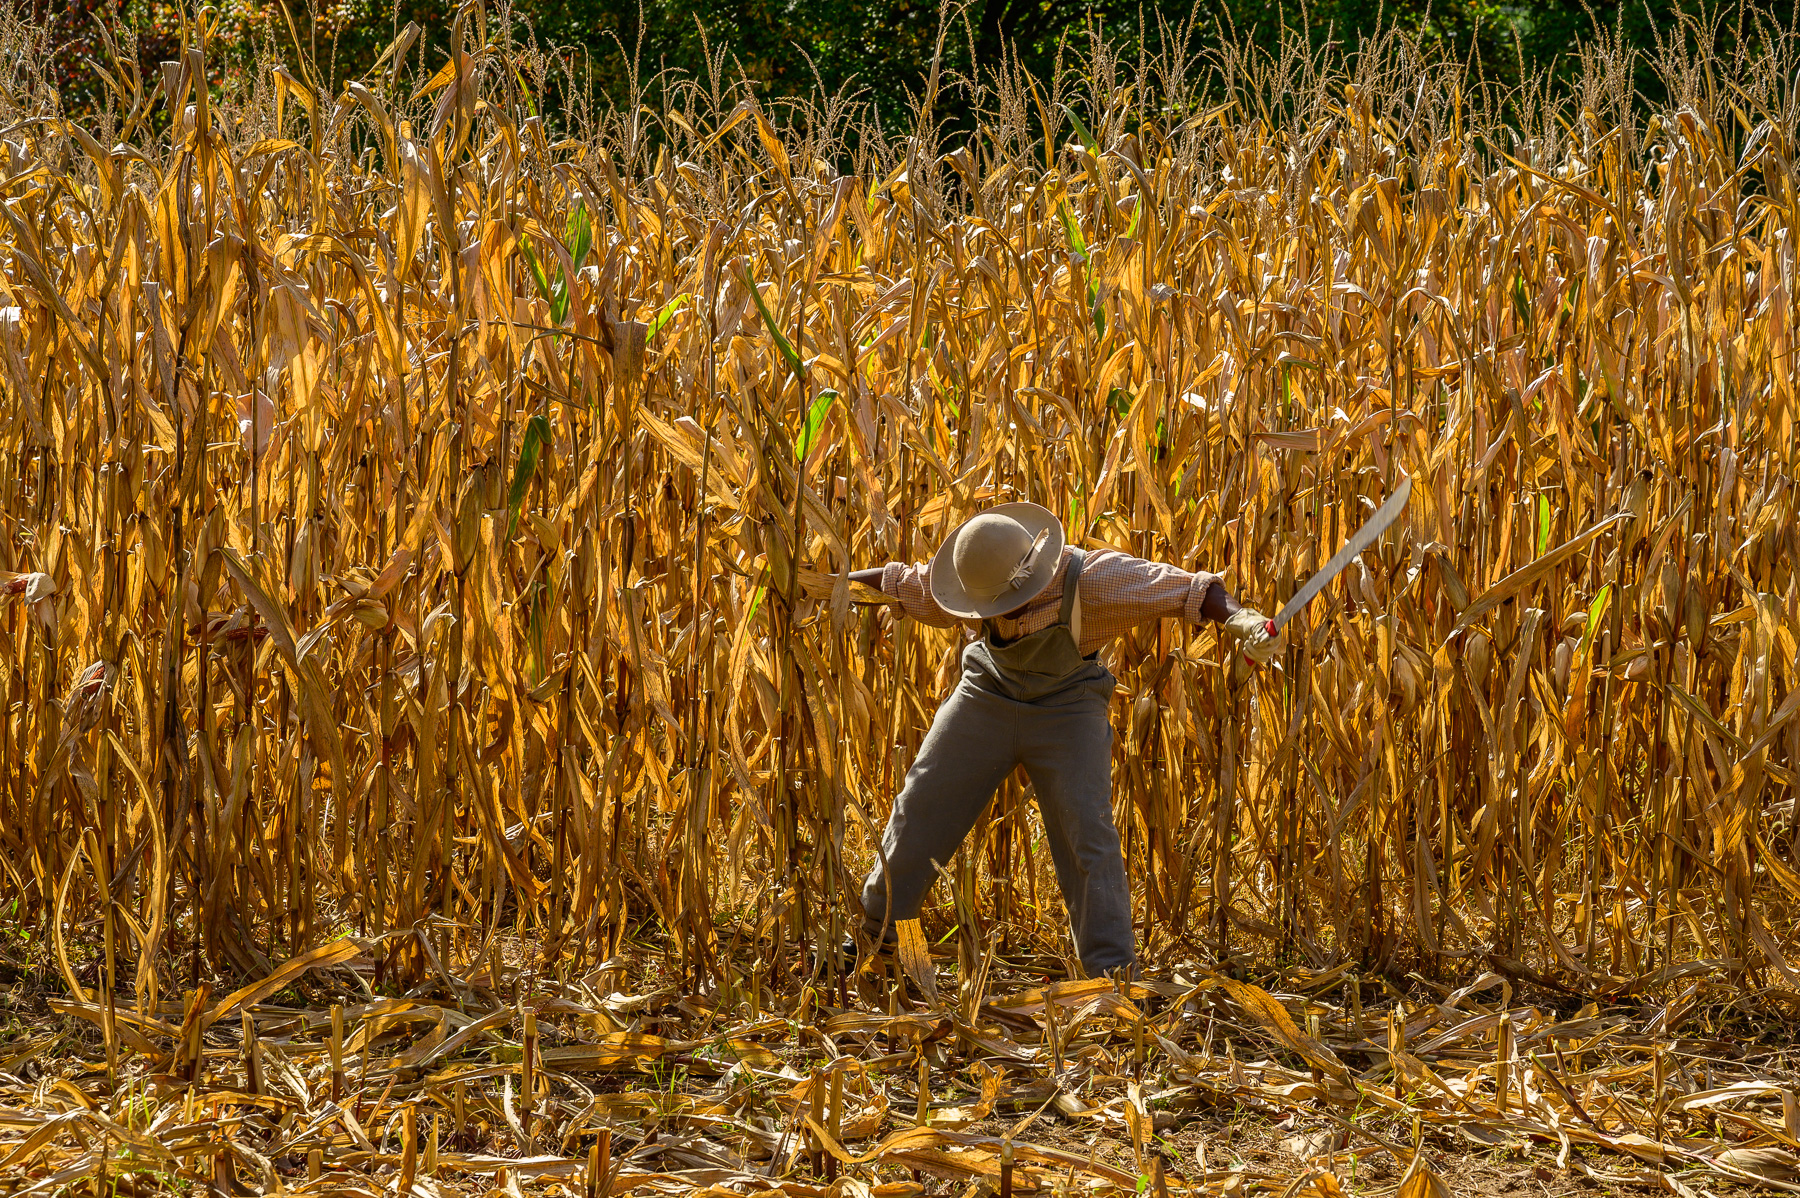 Living Historian demonstrates the 19th century corn harvesting techniques